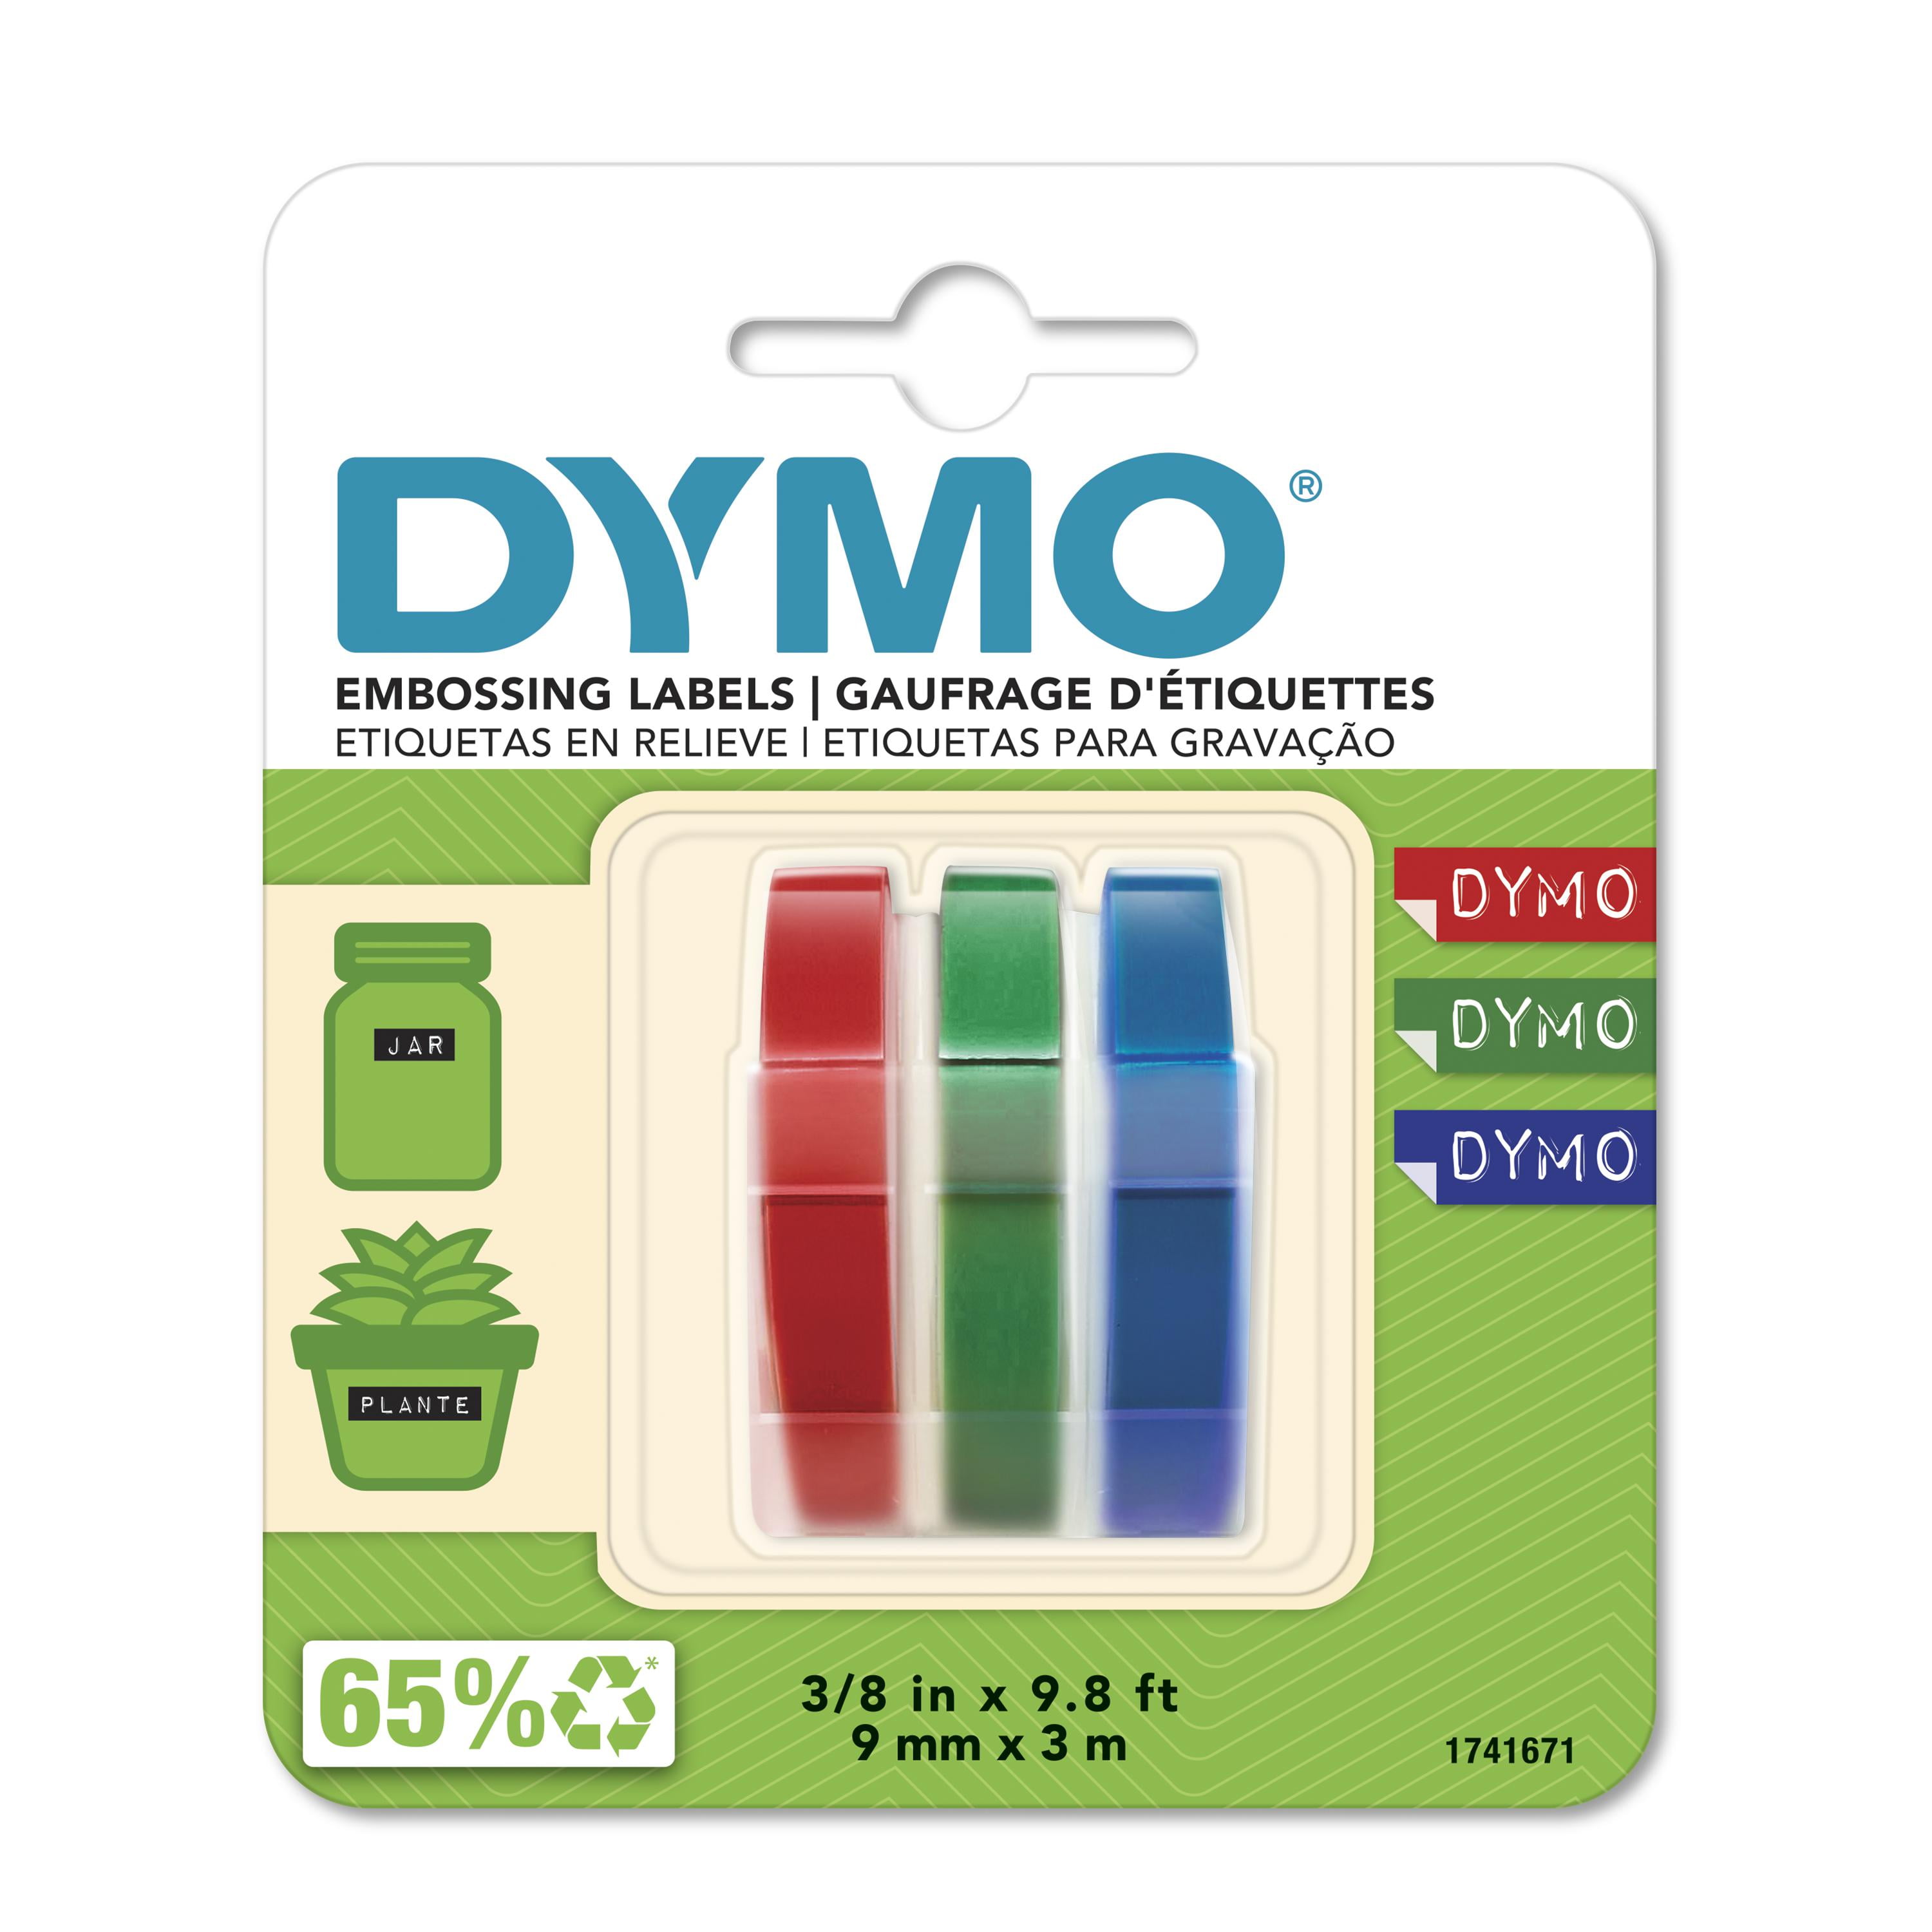 Dymo 10Pcs for Dymo 3D Label Tapes Embossing Labels for Dymo Label Maker Printer E7W2 4894909810381 